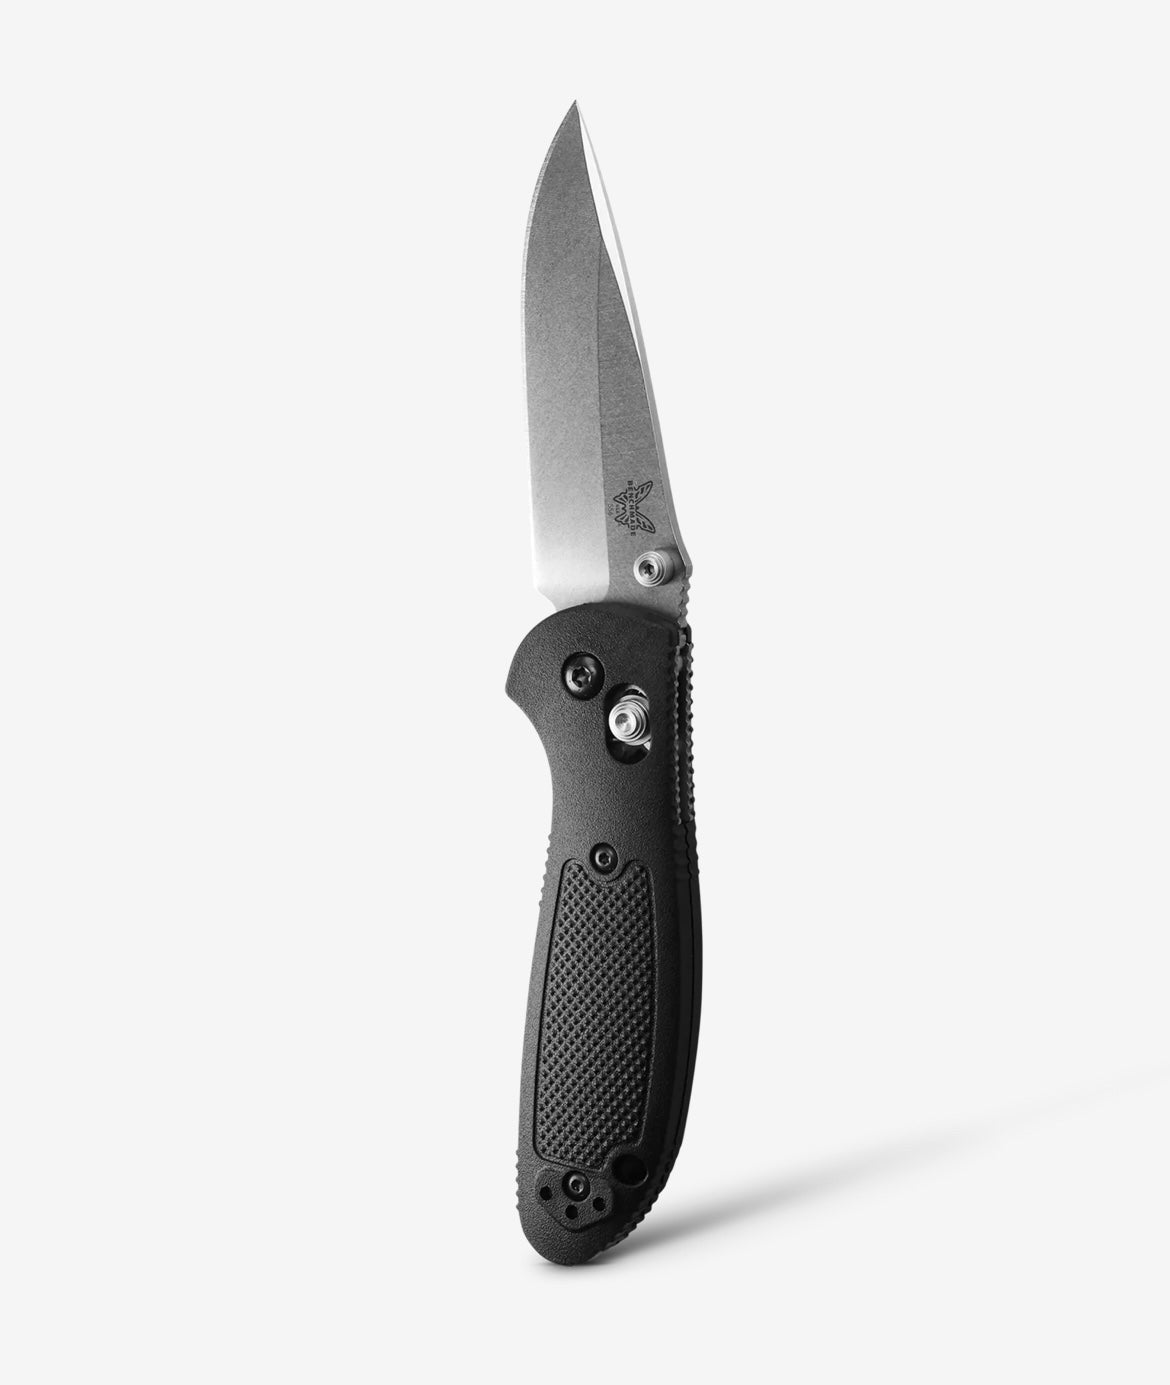 Benchmade Mini Griptilian AXIS Lock Knife Black (2.91" Satin) 556-S30V